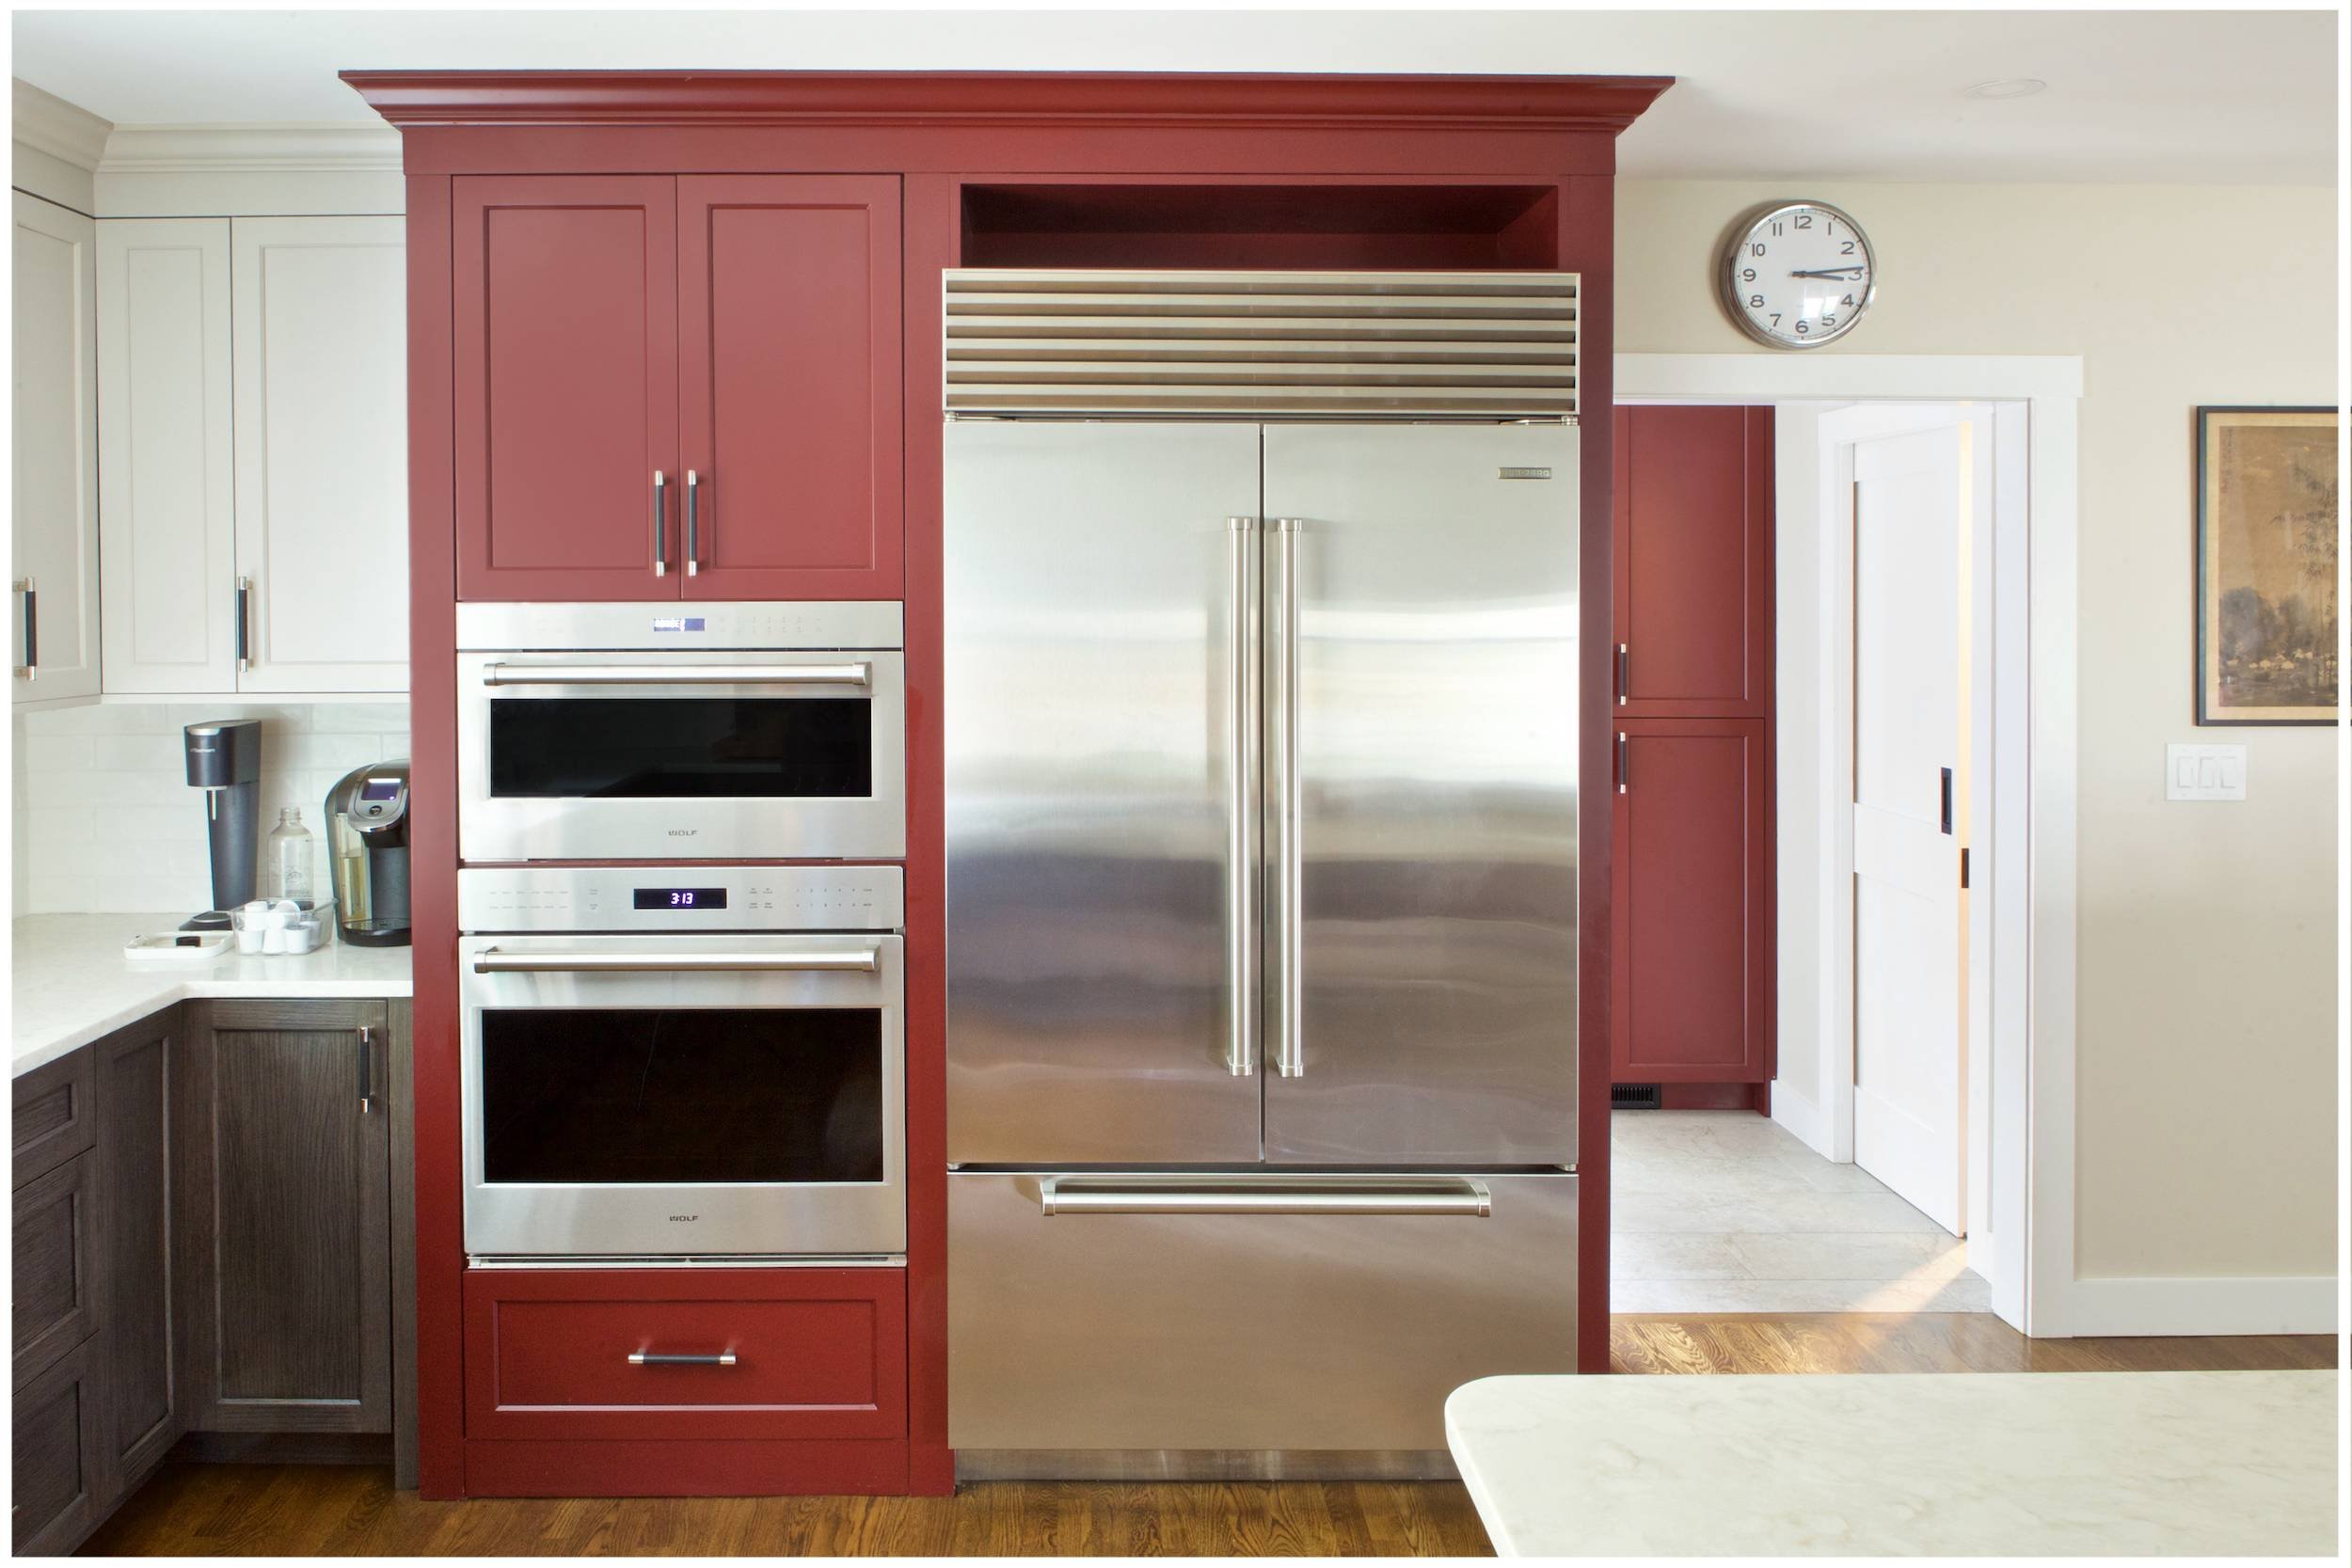 Modern+Revamp+Belmont+Kitchen+Red+Cabinet+Ovens+Refrigeration+KITCHENVISIONS.jpg